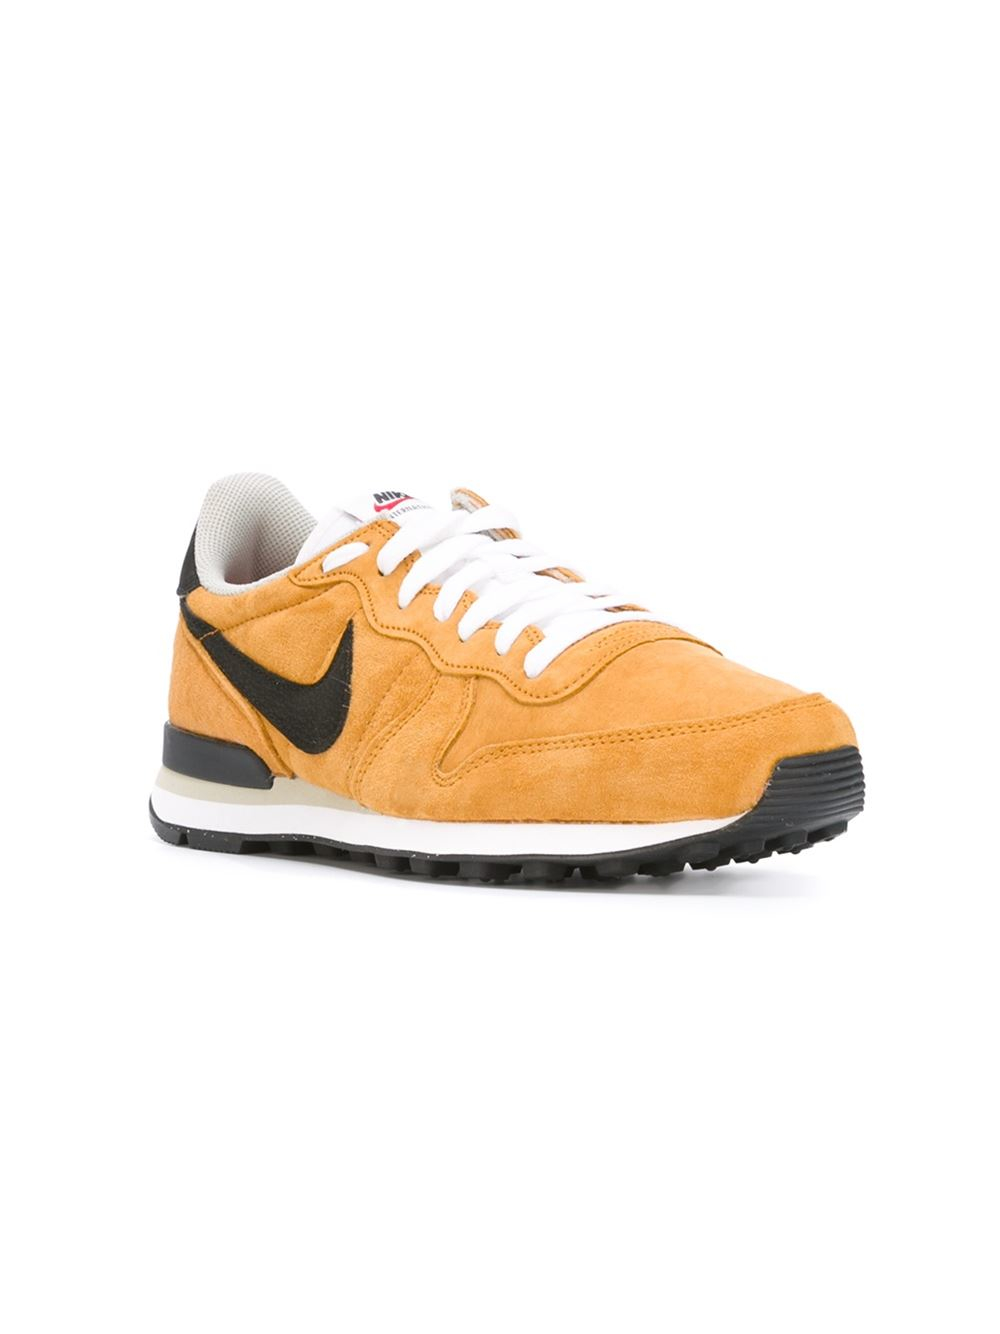 Nike 'internationalist' Sneakers in Yellow & Orange (Yellow) for Men - Lyst